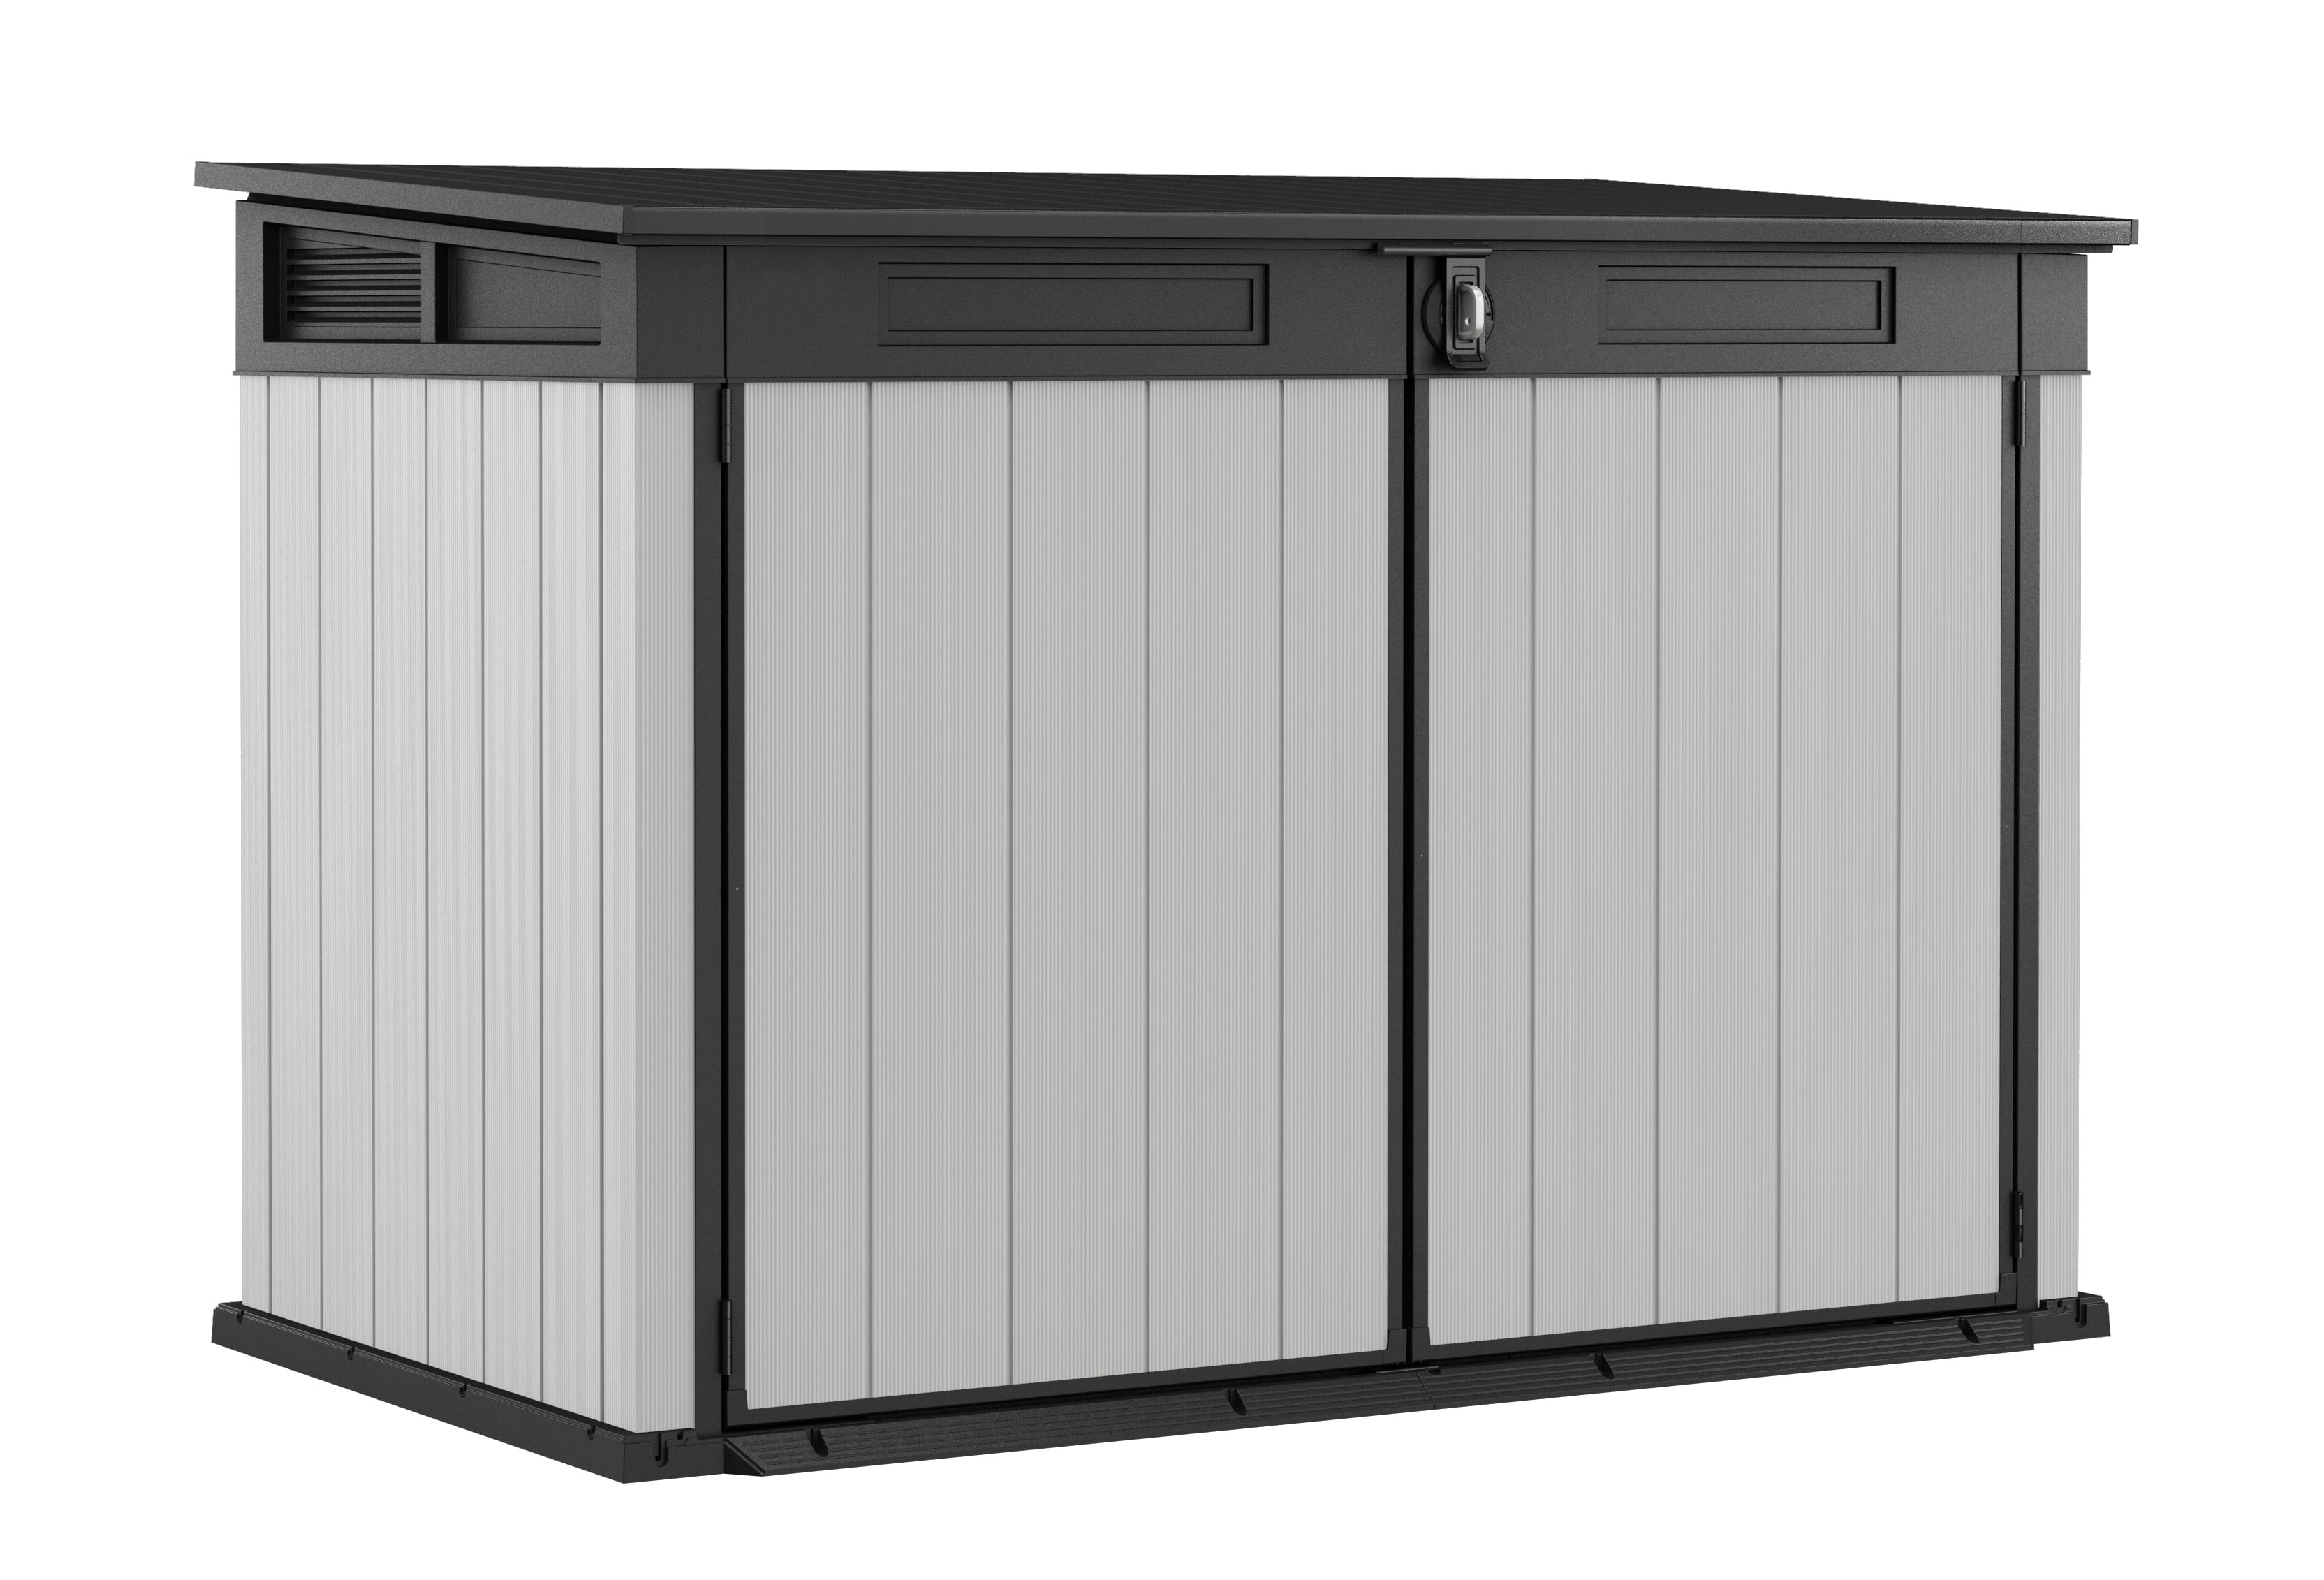 Keter Keter Grey Outdoor Box Large Storage Shed Garden Lockable Waterproof Outside 